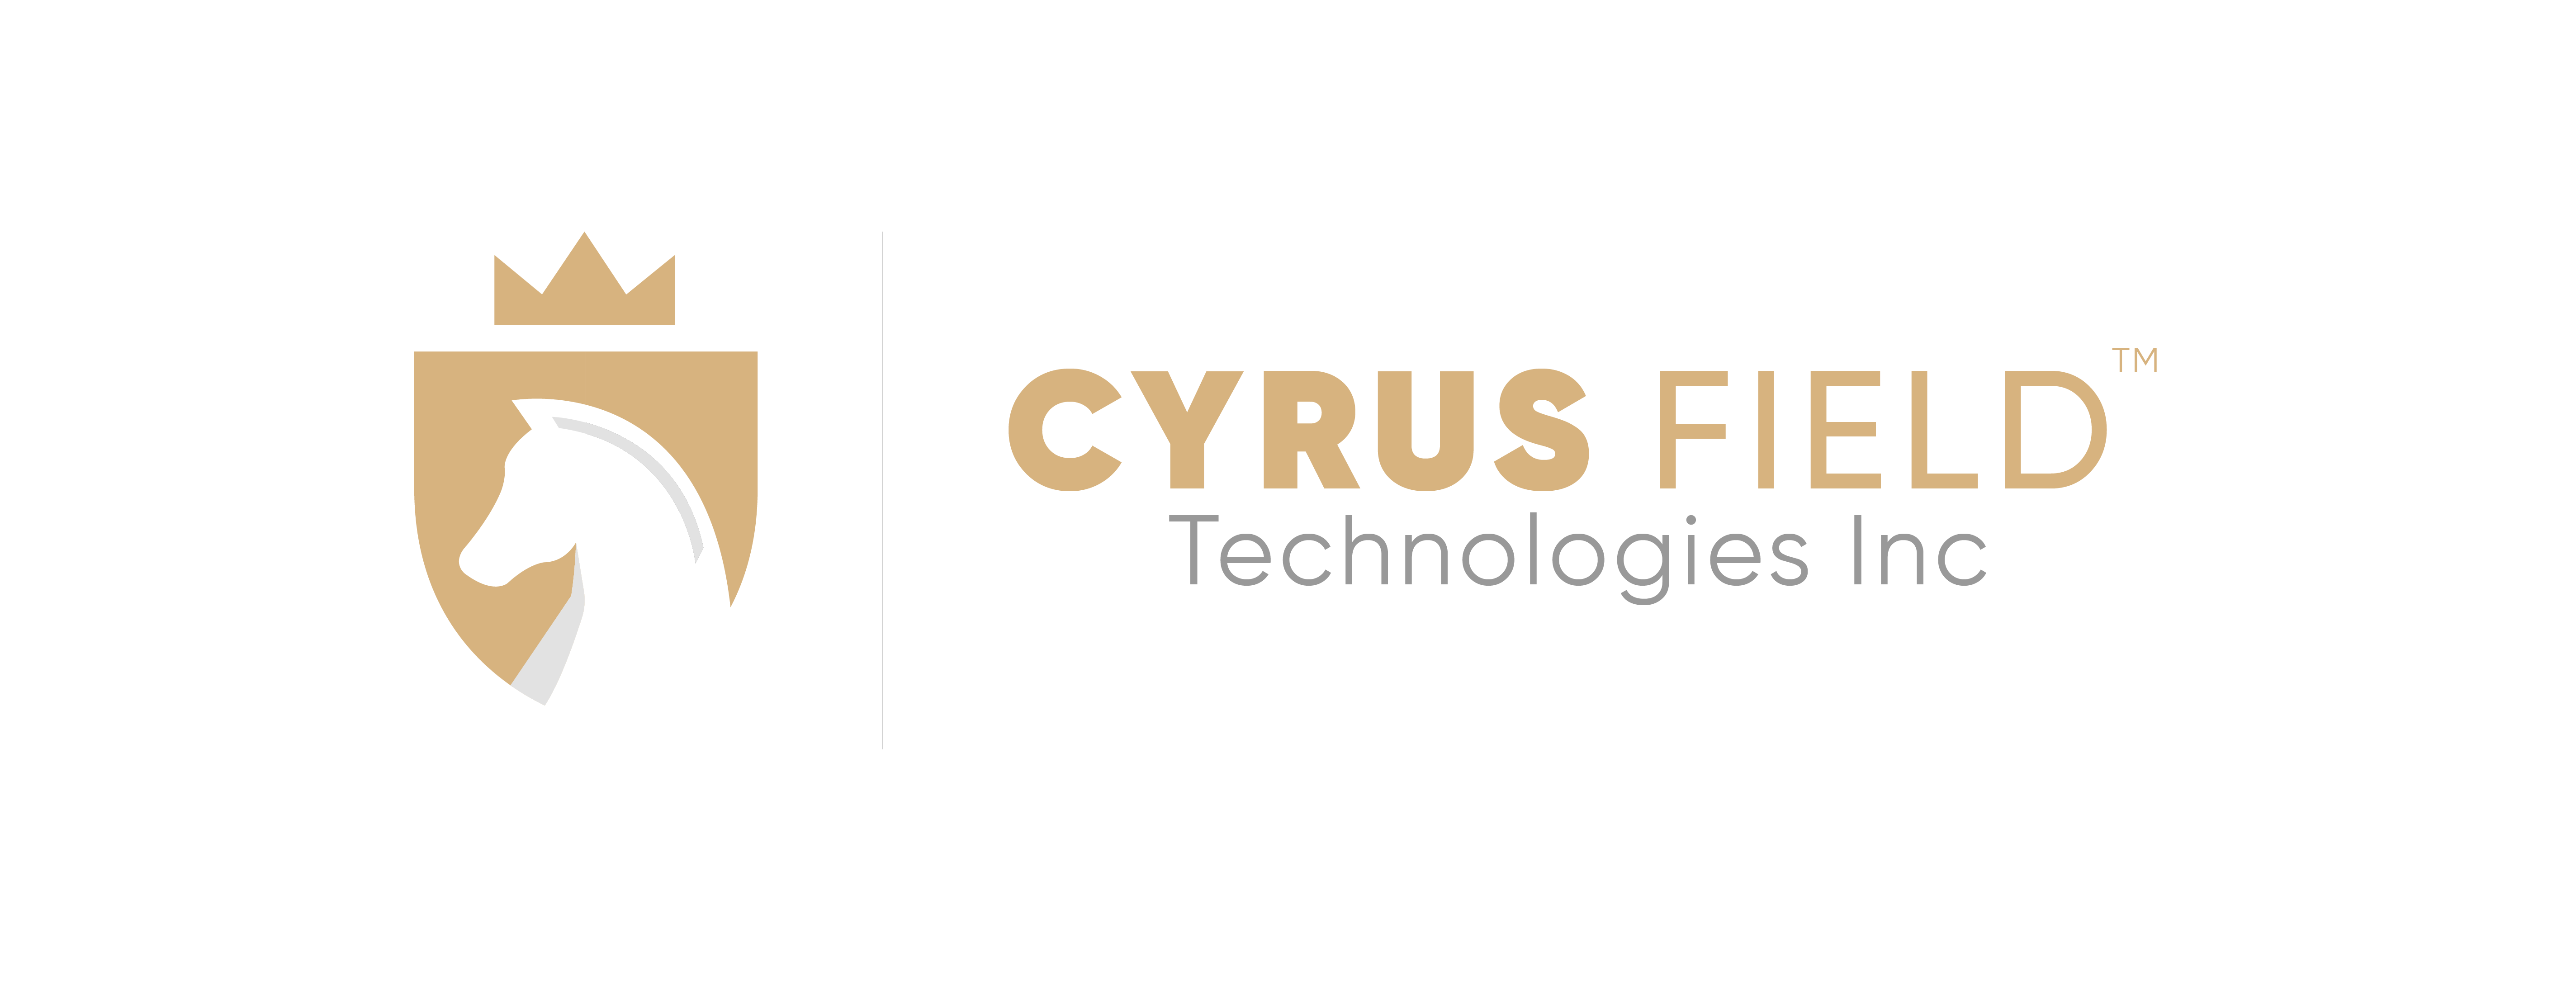 Cyrus Field Technologies